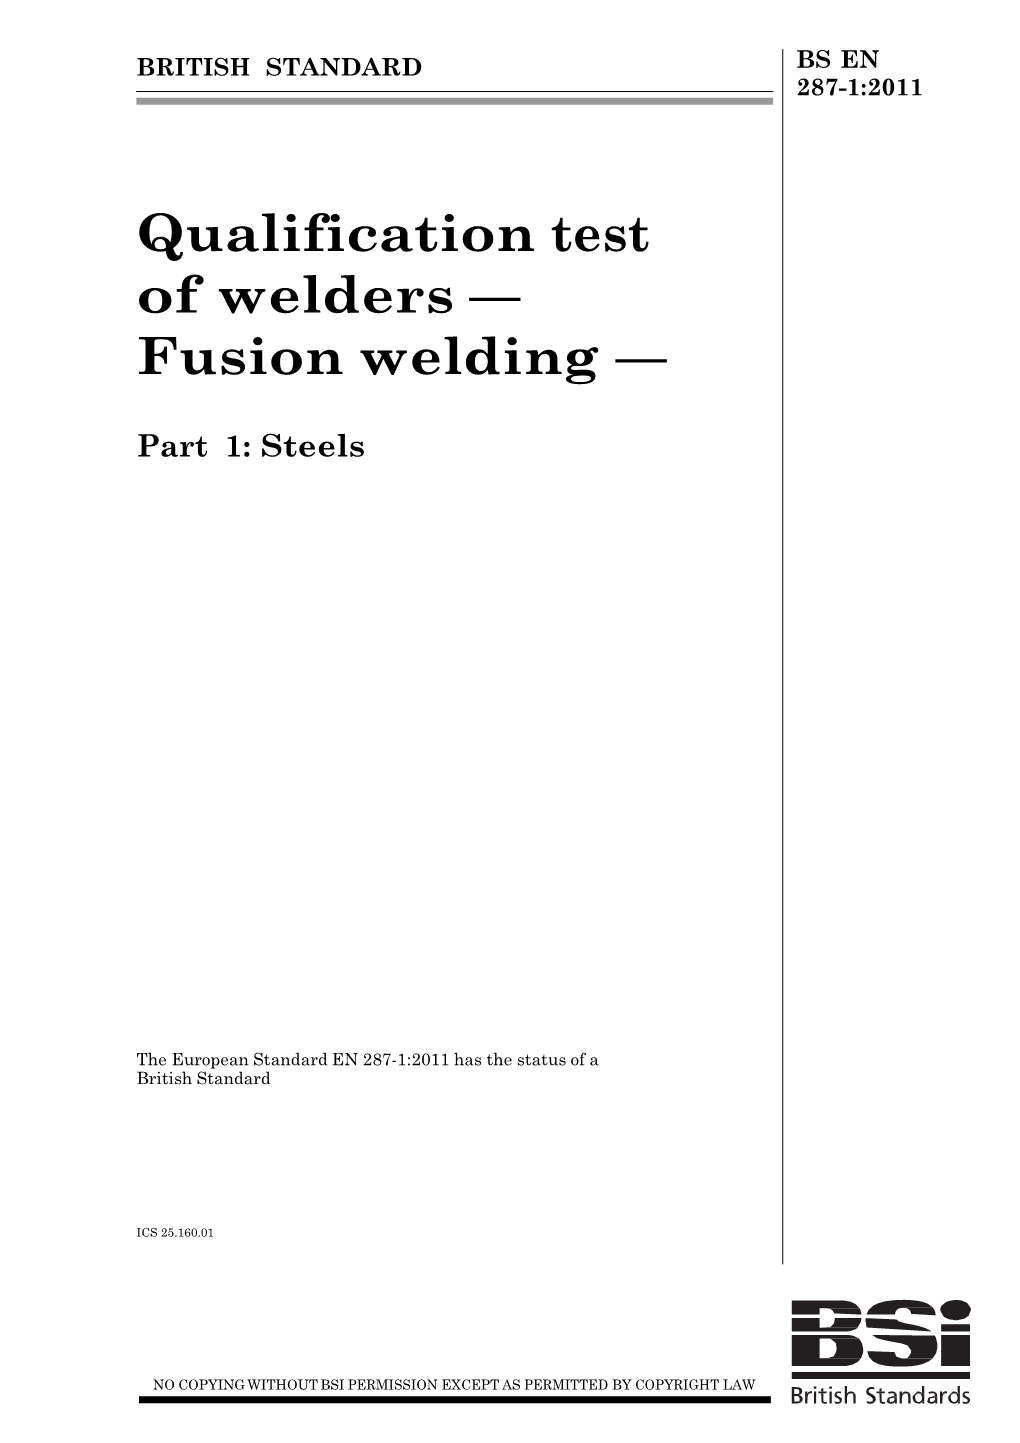 Qualification Test of Welders — Fusion Welding